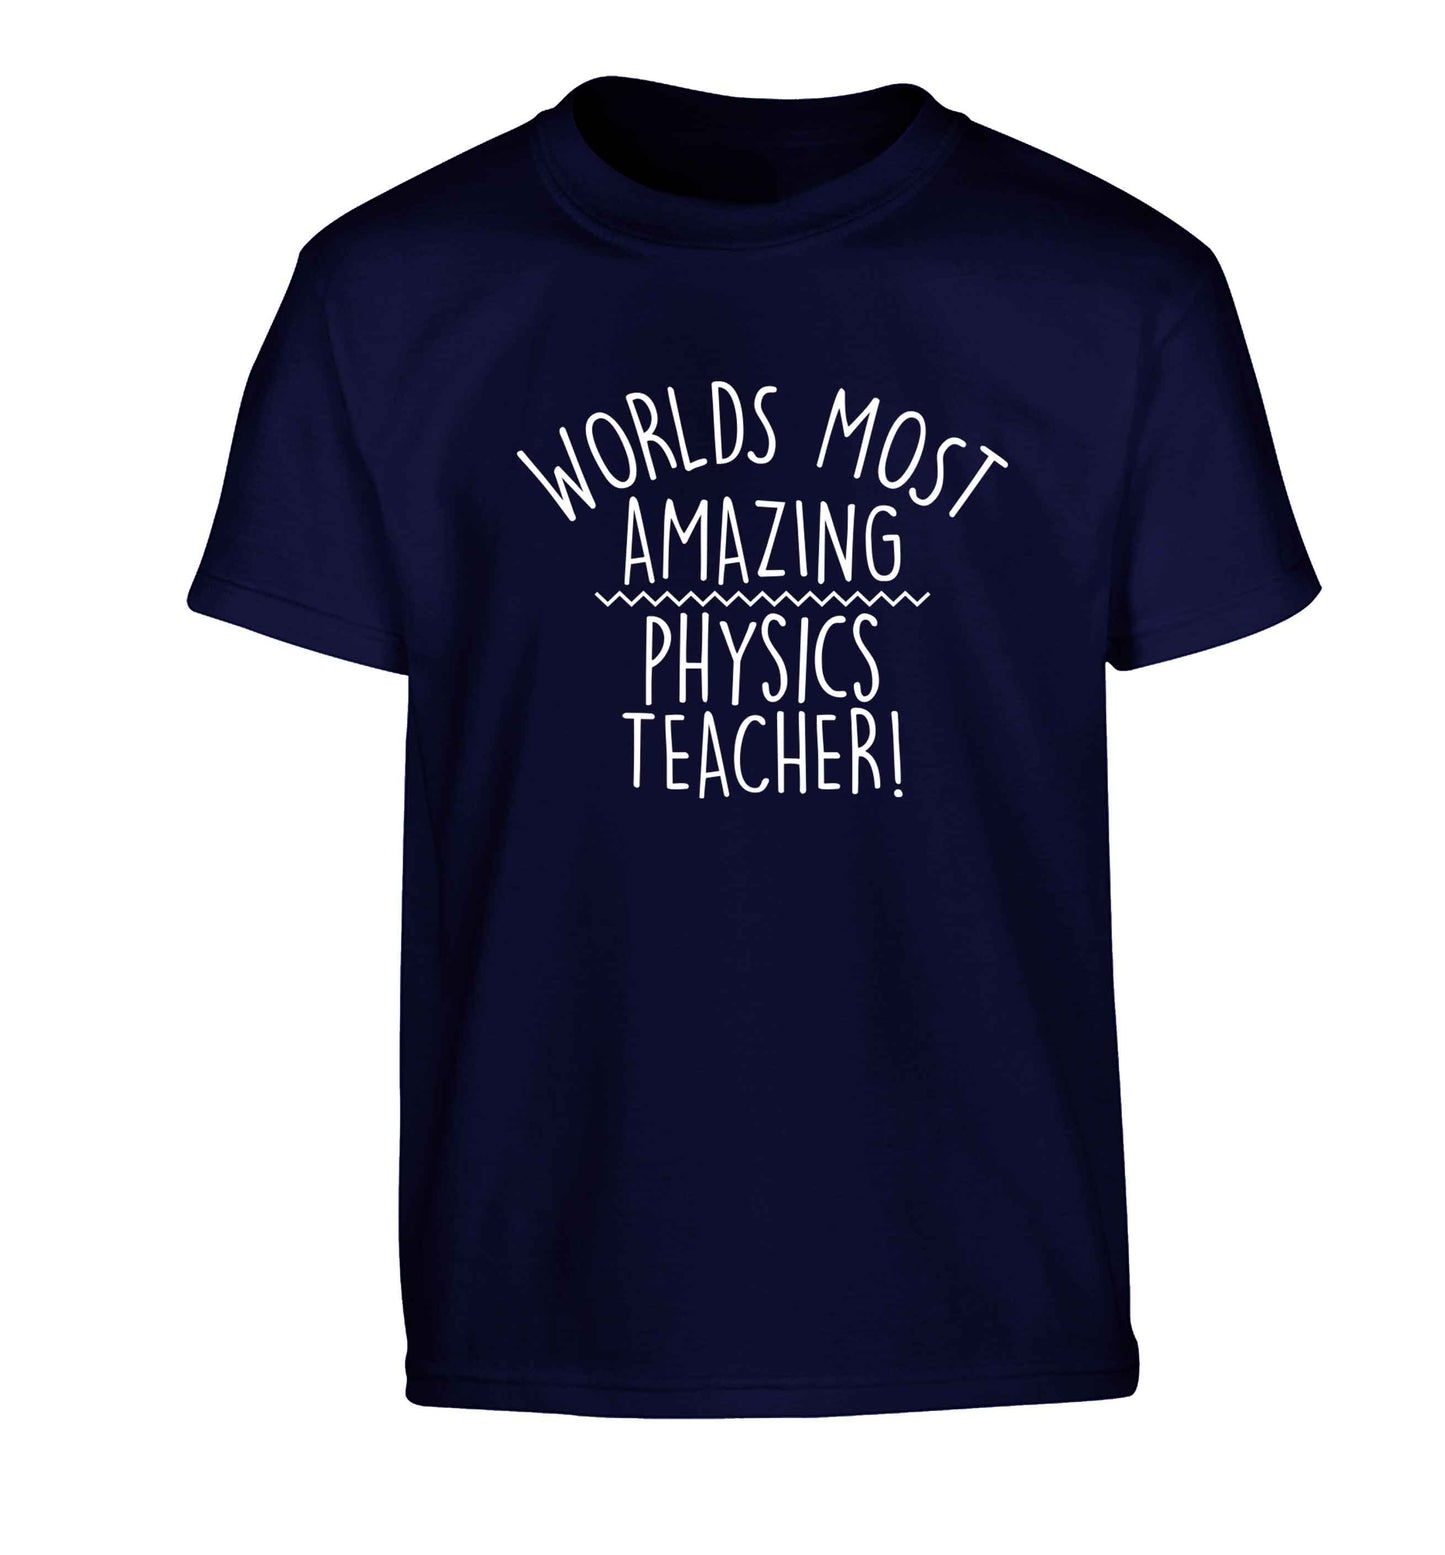 Worlds most amazing physics teacher Children's navy Tshirt 12-13 Years